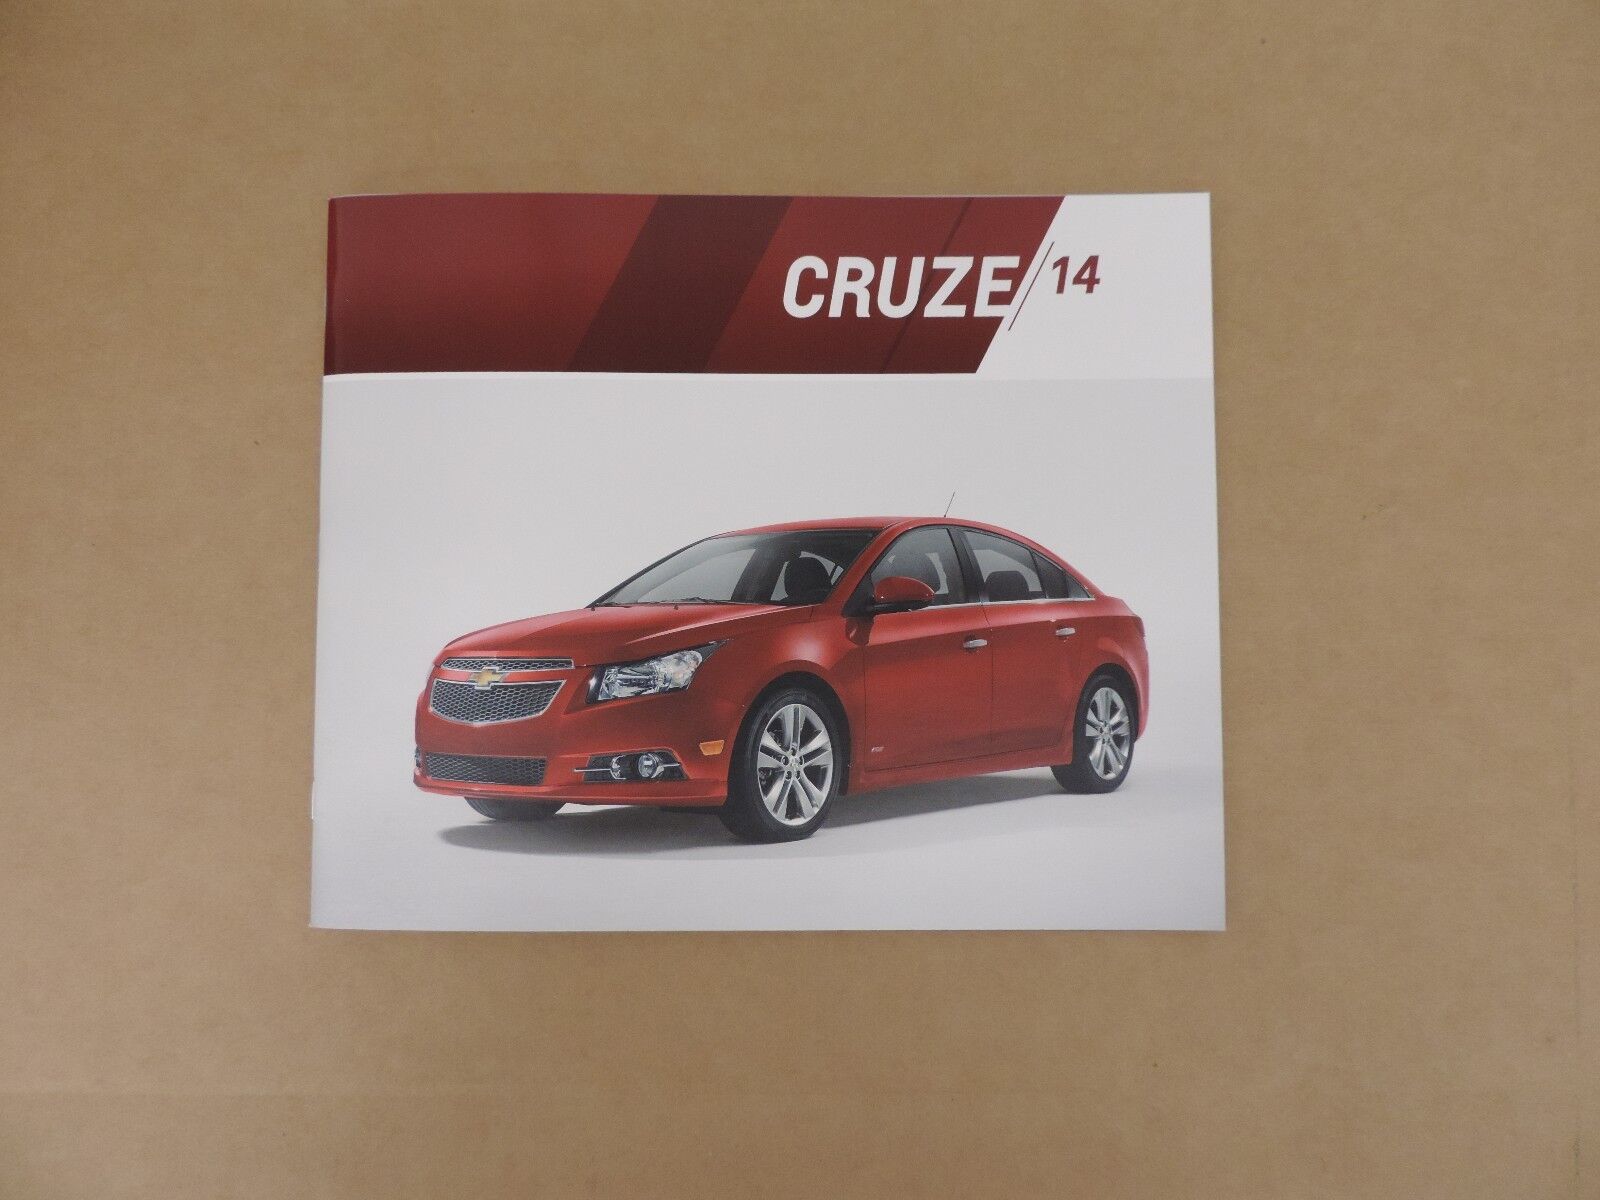 2014 Chevrolet Chevy Cruze LS LT LTZ ECO sales brochure dealer literature 32 pg